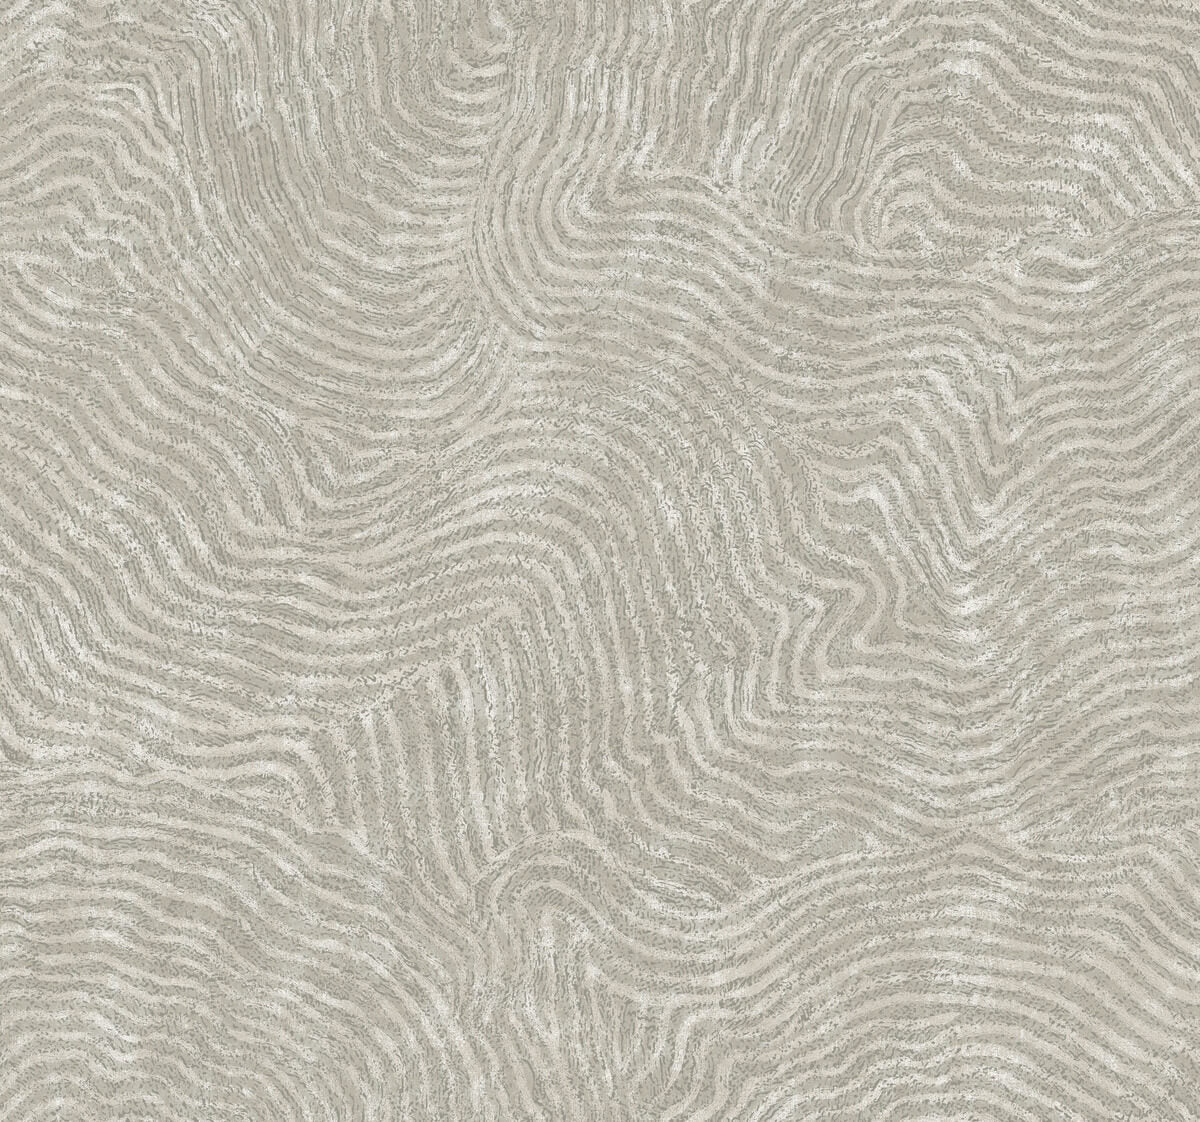 New Origins Modern Wood Wallpaper - Grey